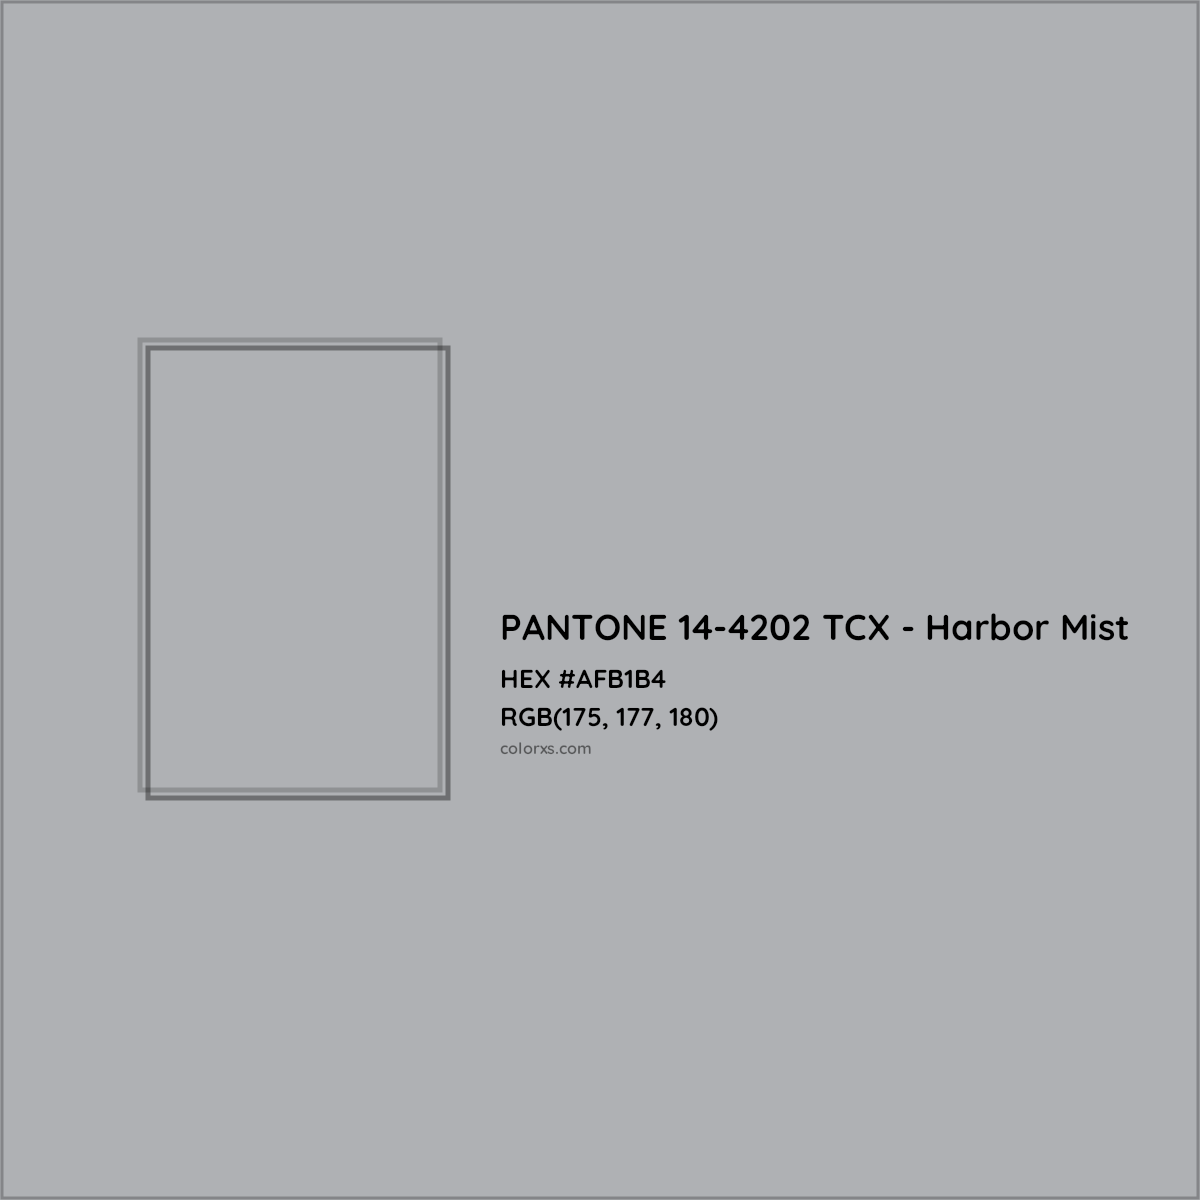 HEX #AFB1B4 PANTONE 14-4202 TCX - Harbor Mist CMS Pantone TCX - Color Code